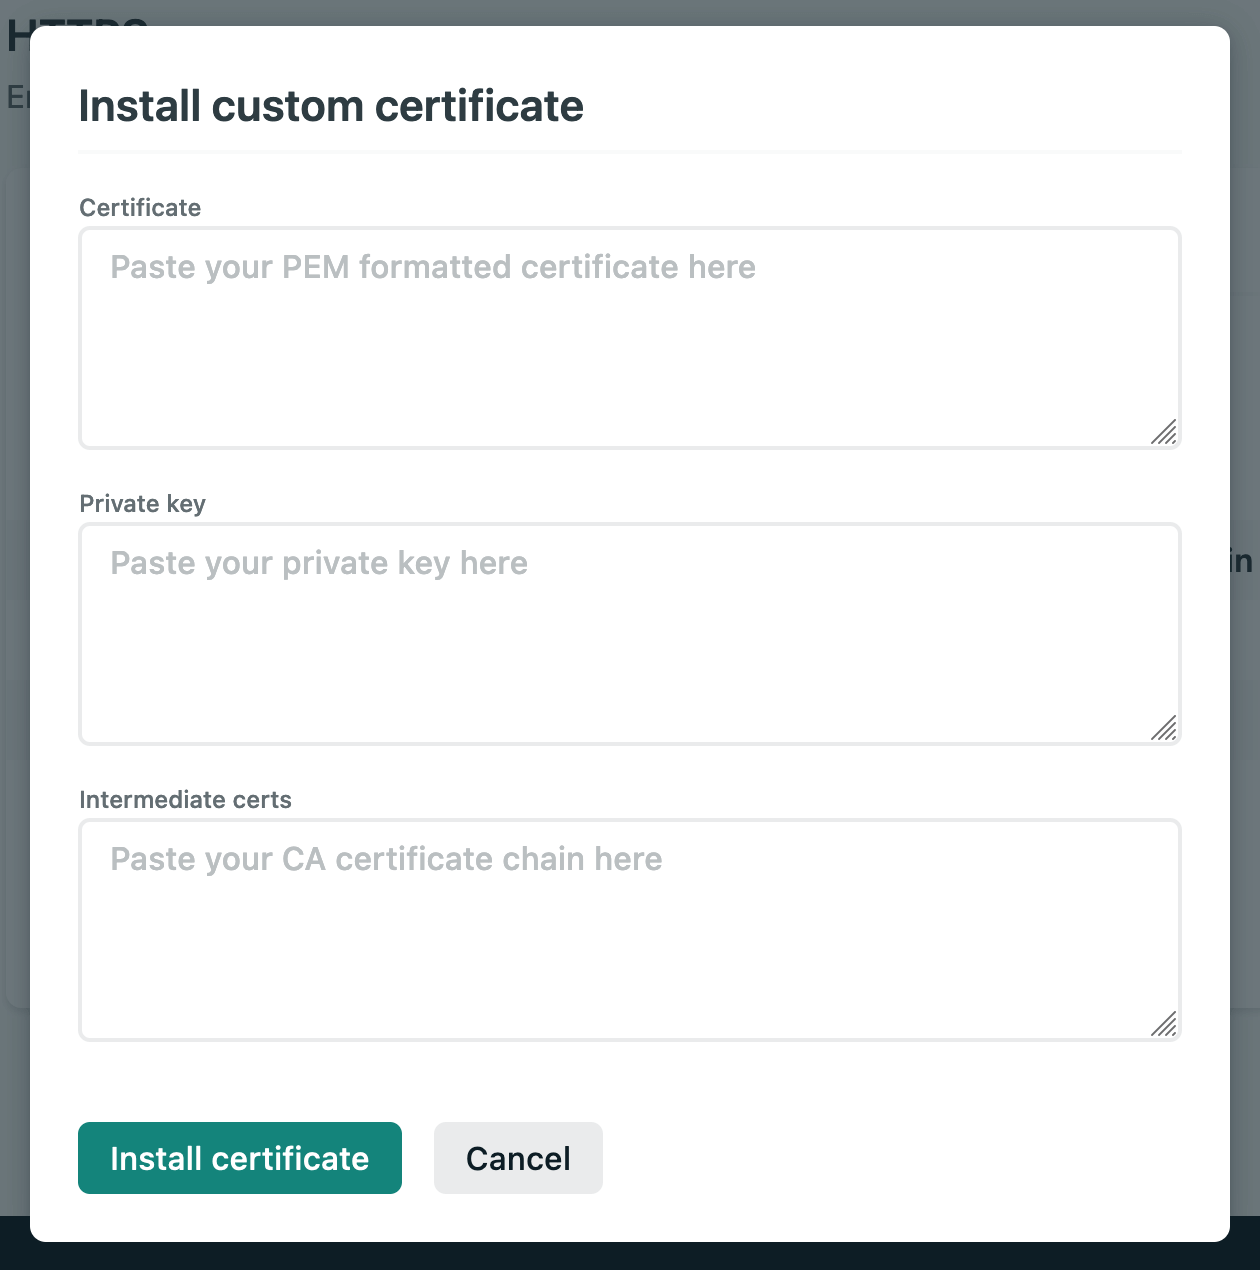 Install custom certificate dialog in Netlify.